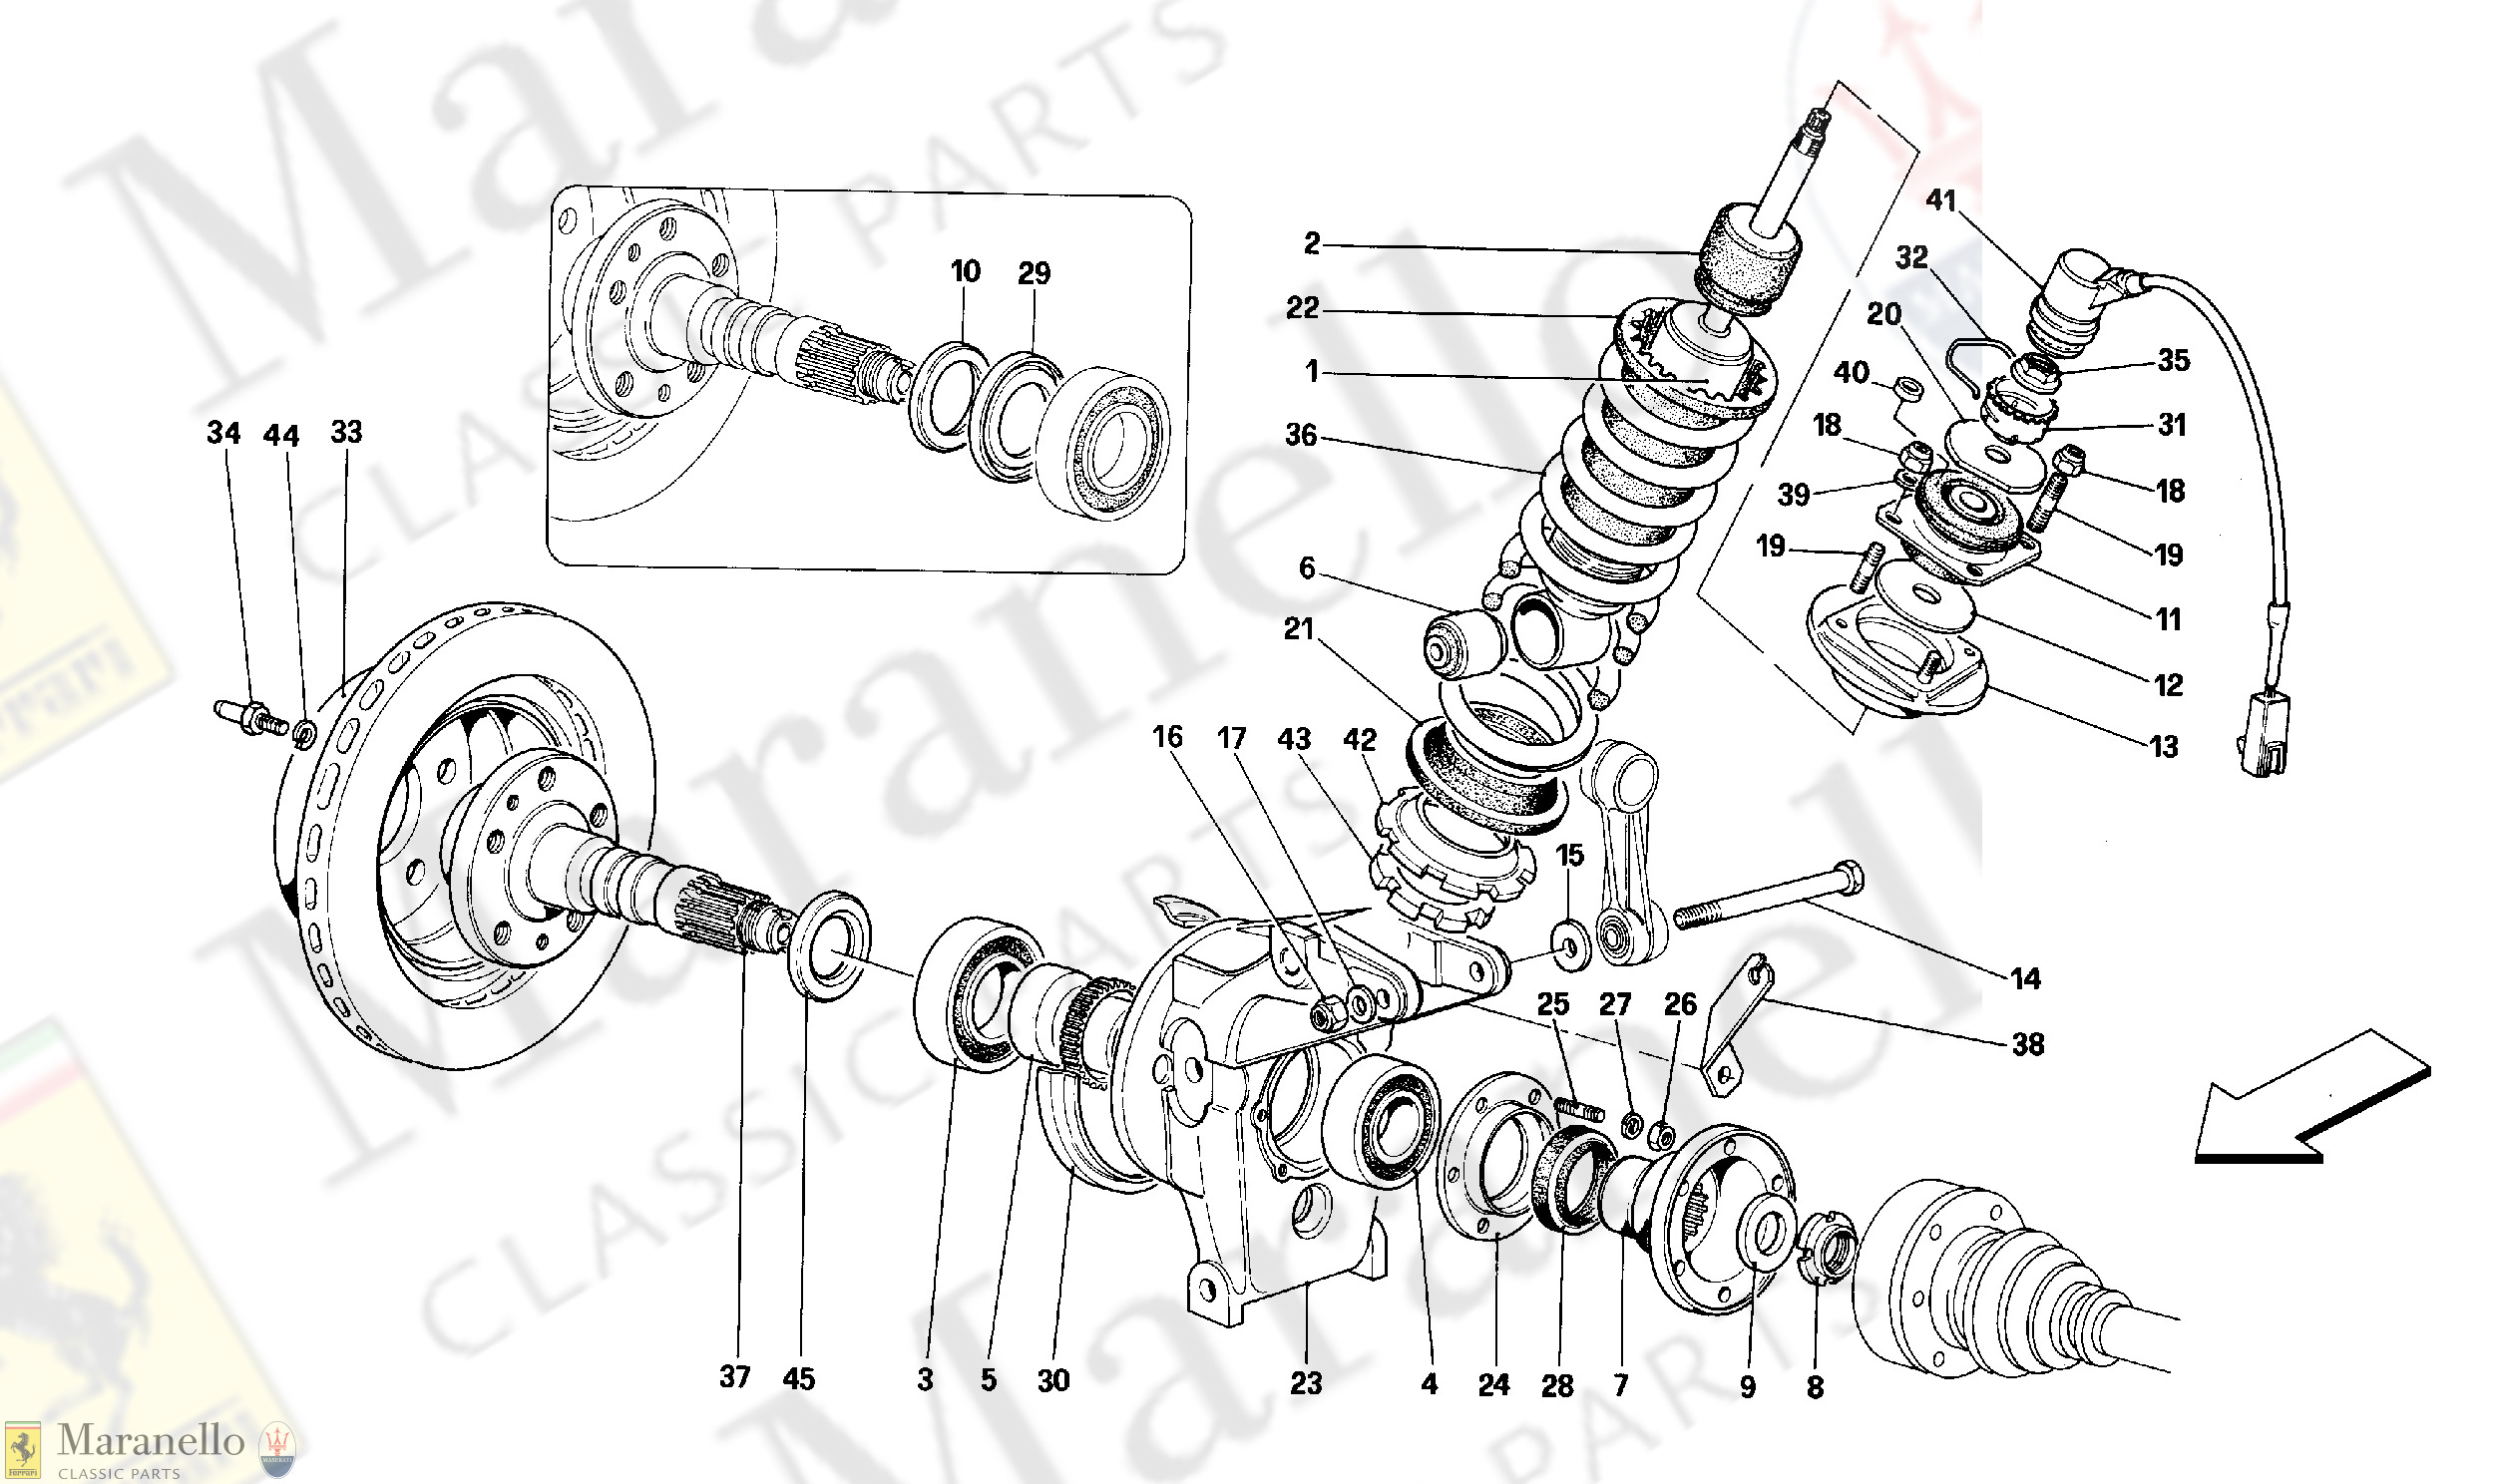 054 - Rear Suspension - Shock Absorber And Brake Disc